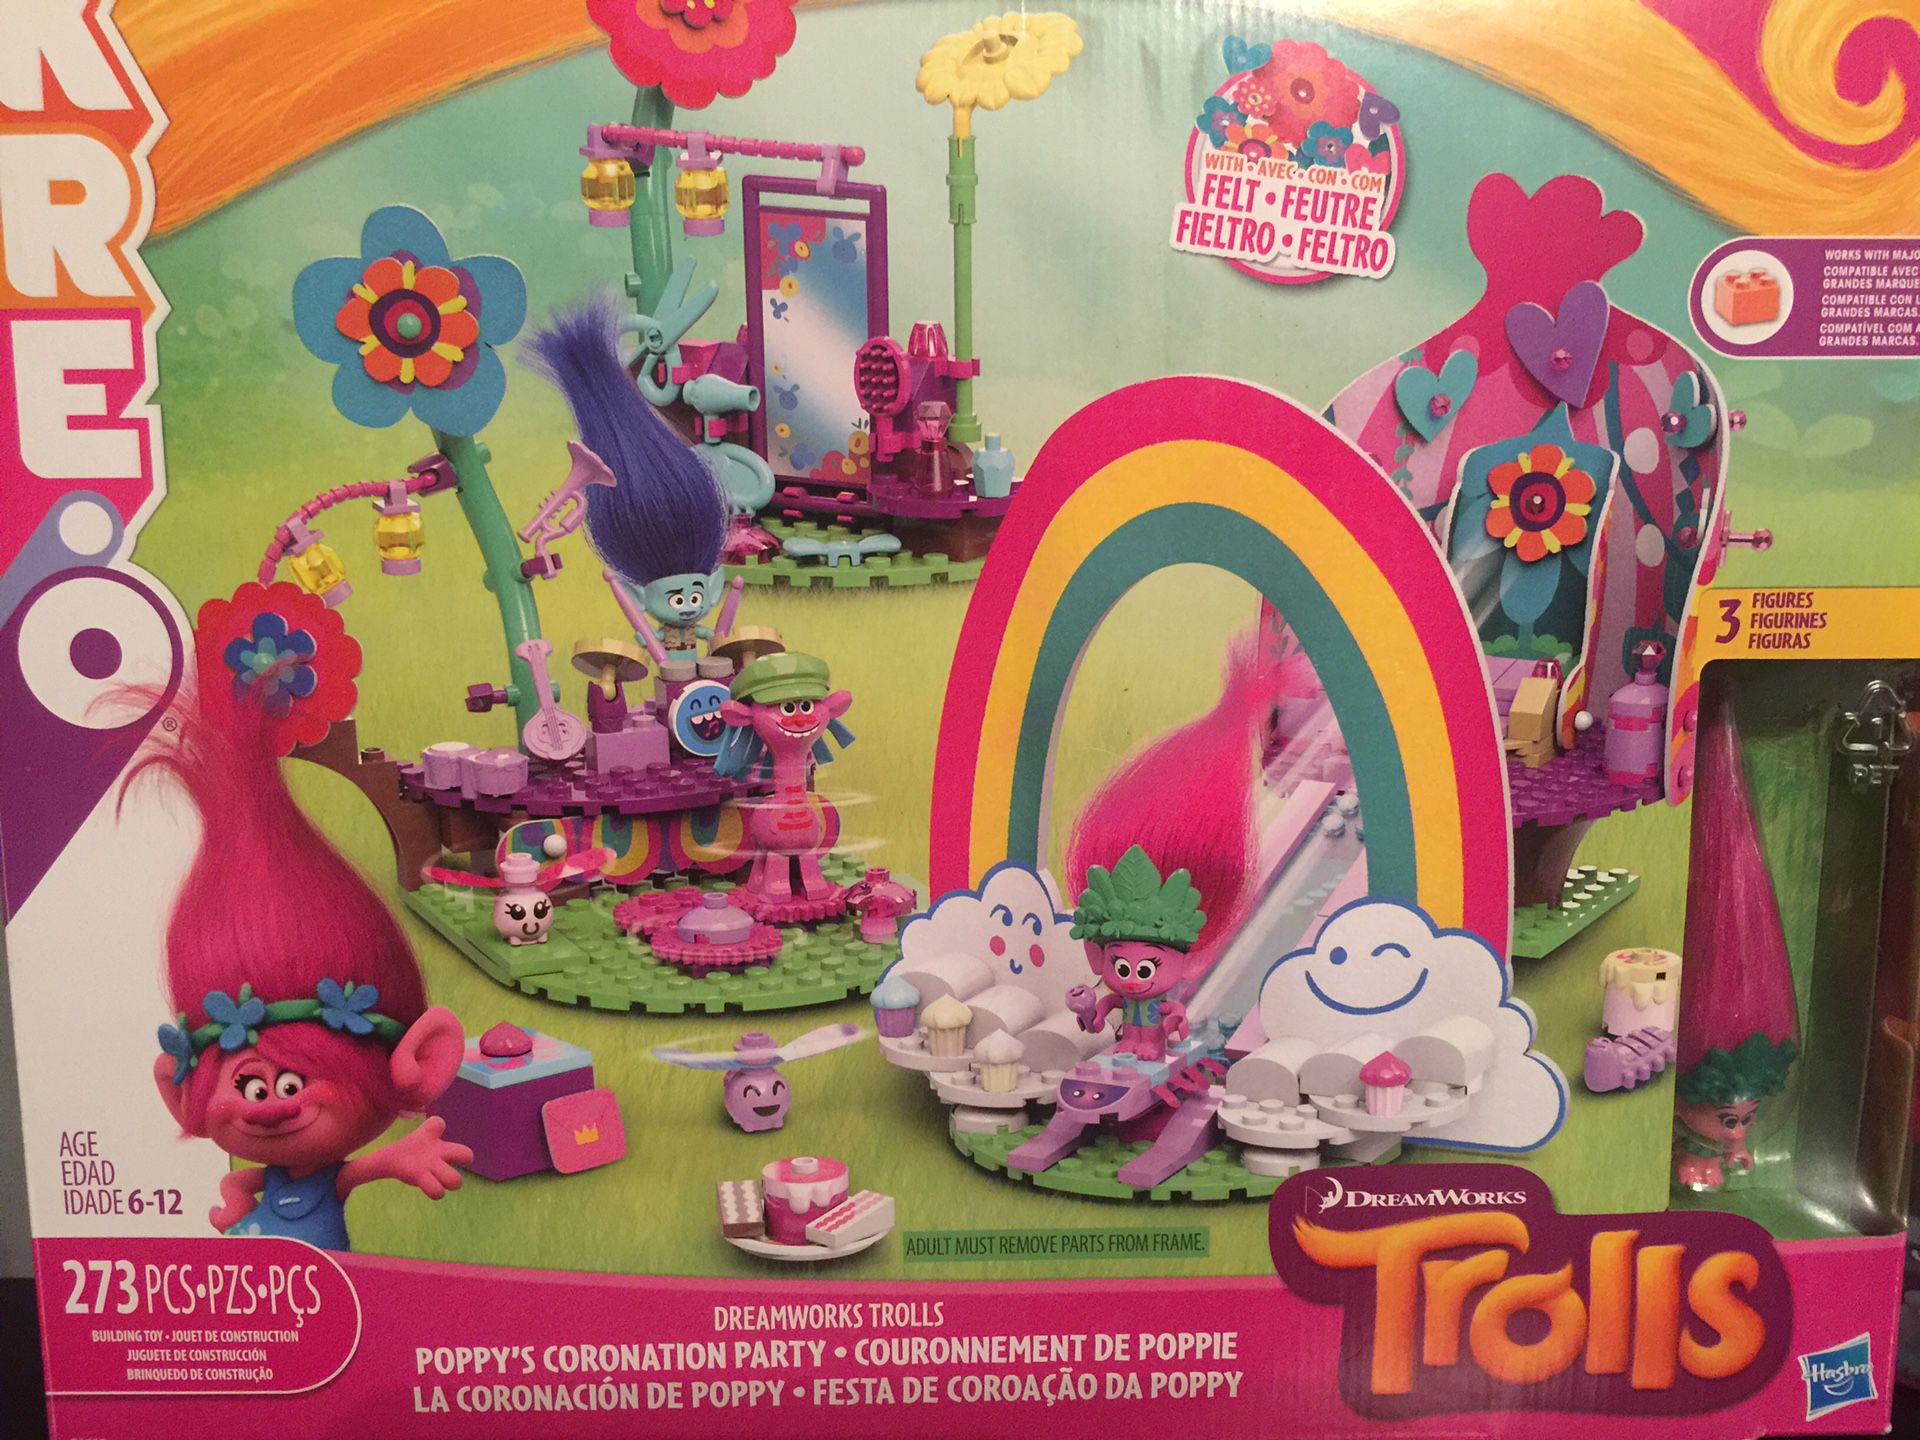 Hasbro 2015 DreamWorks Trolls Gia Grooves and Poppy Doll Set